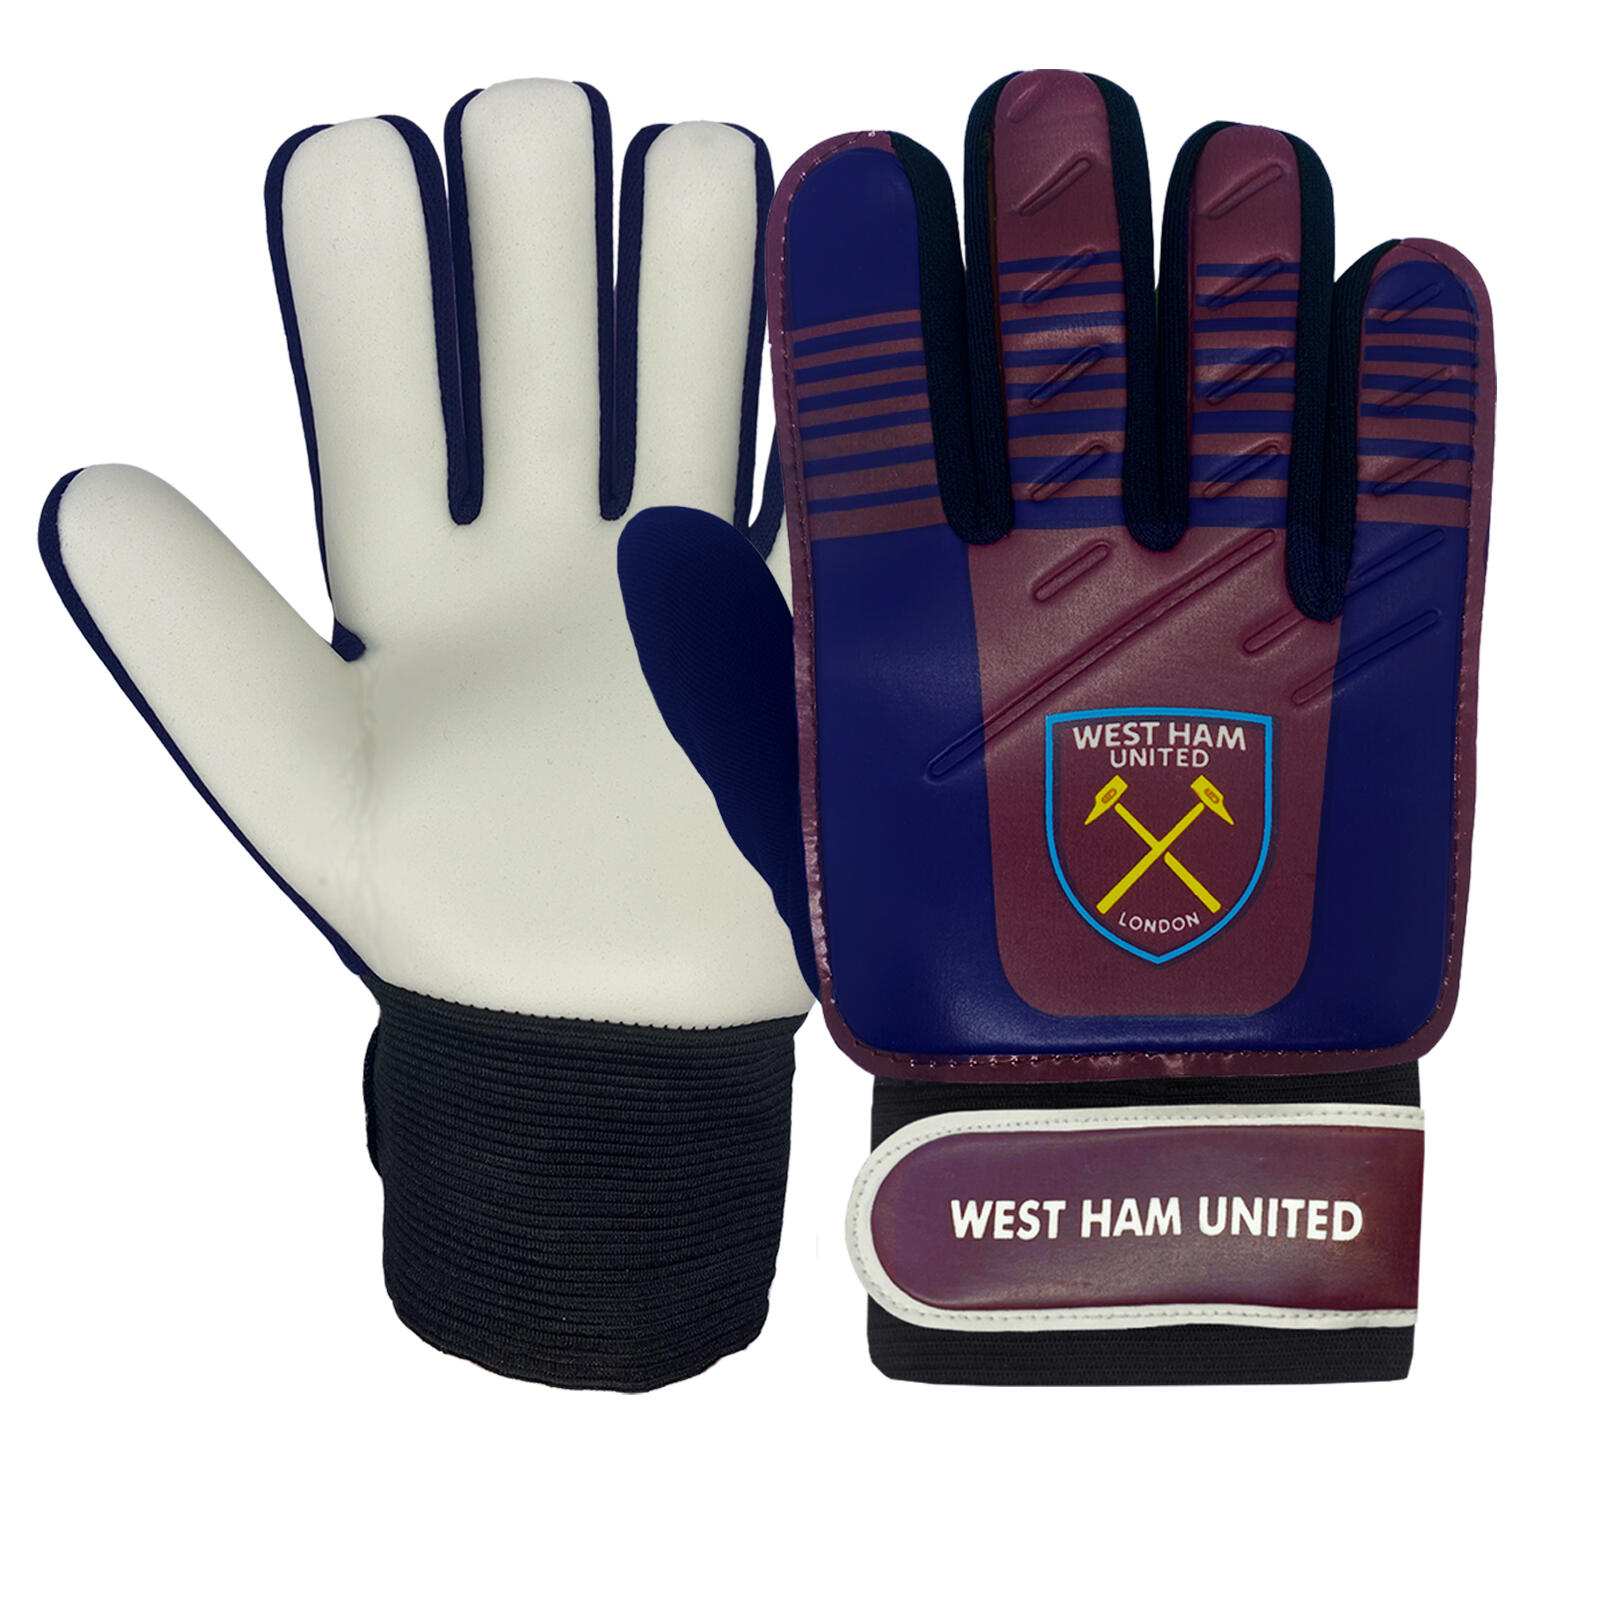 WEST HAM UNITED West Ham United Boys Gloves Goalie Goalkeeper Kids Youths OFFICIAL Football Gift